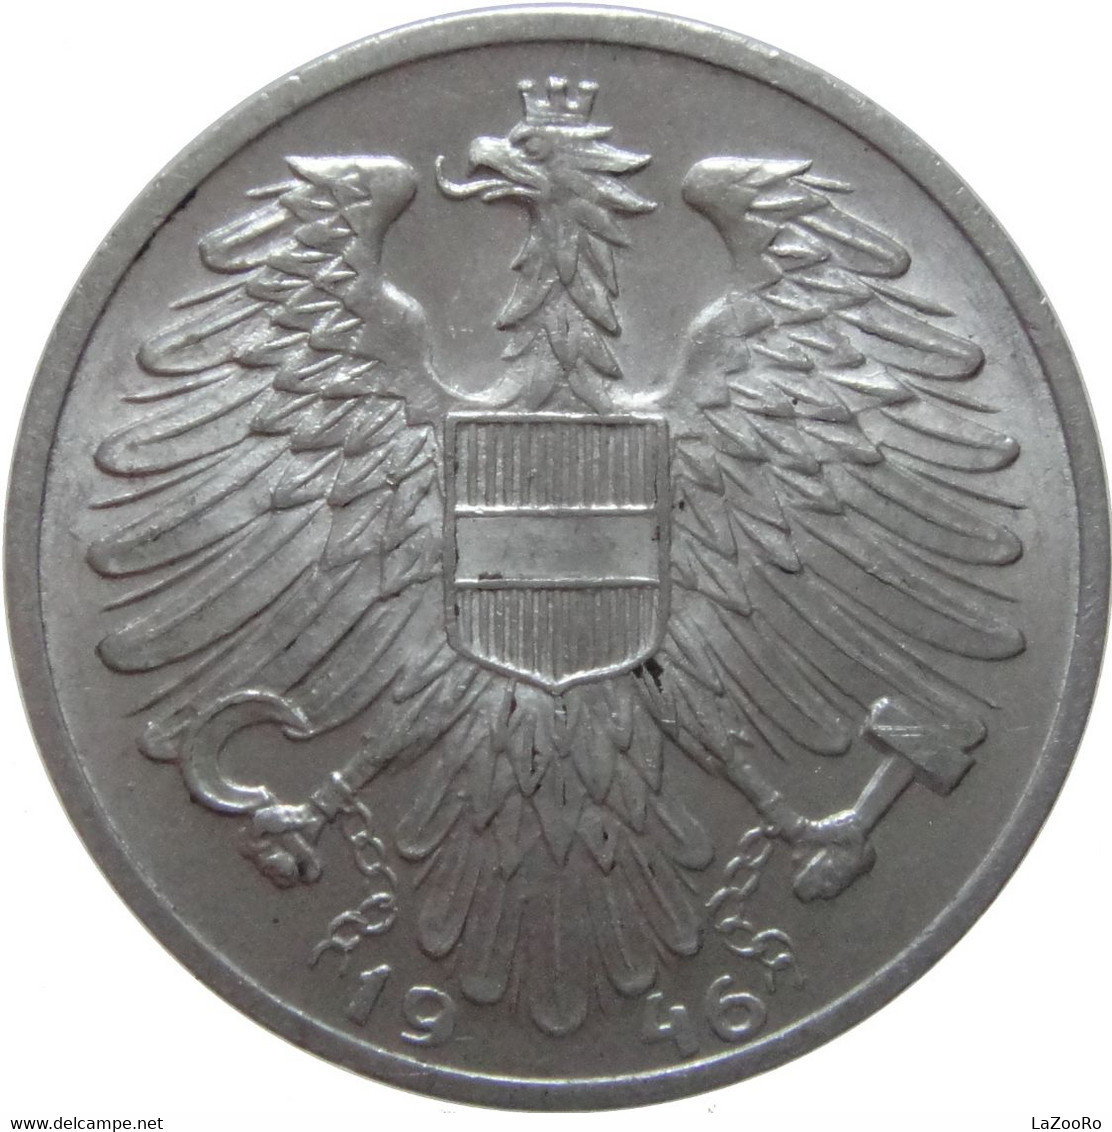 LaZooRo: Austria 1 Schilling 1946 UNC - Autriche